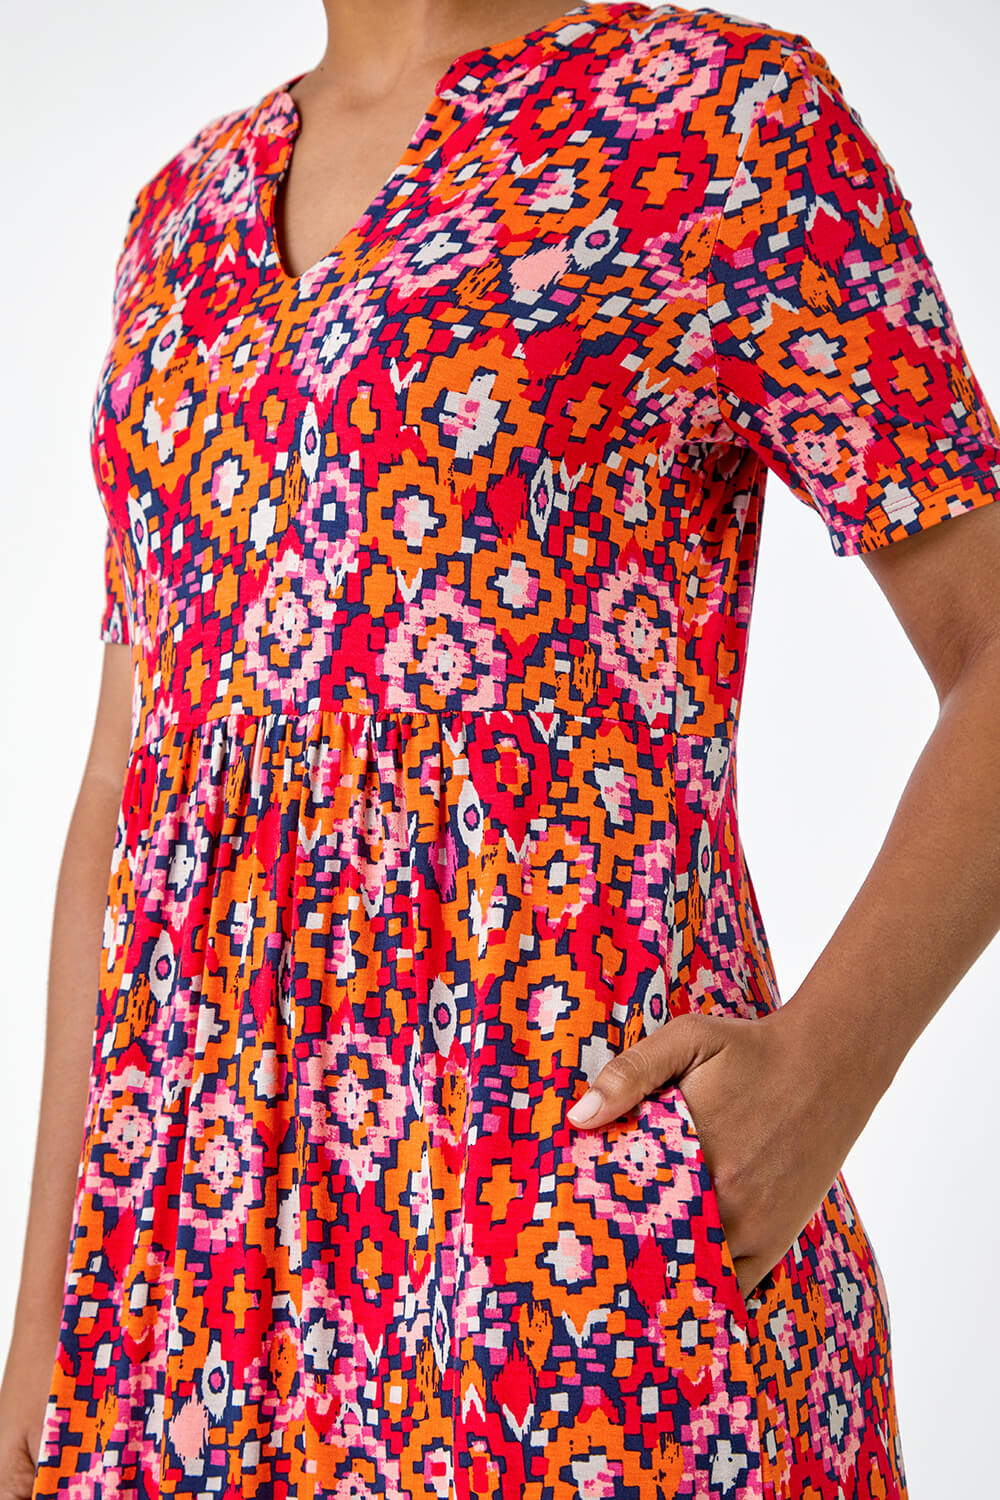 Red Aztec Print Stretch Jersey Pocket Dress, Image 5 of 5